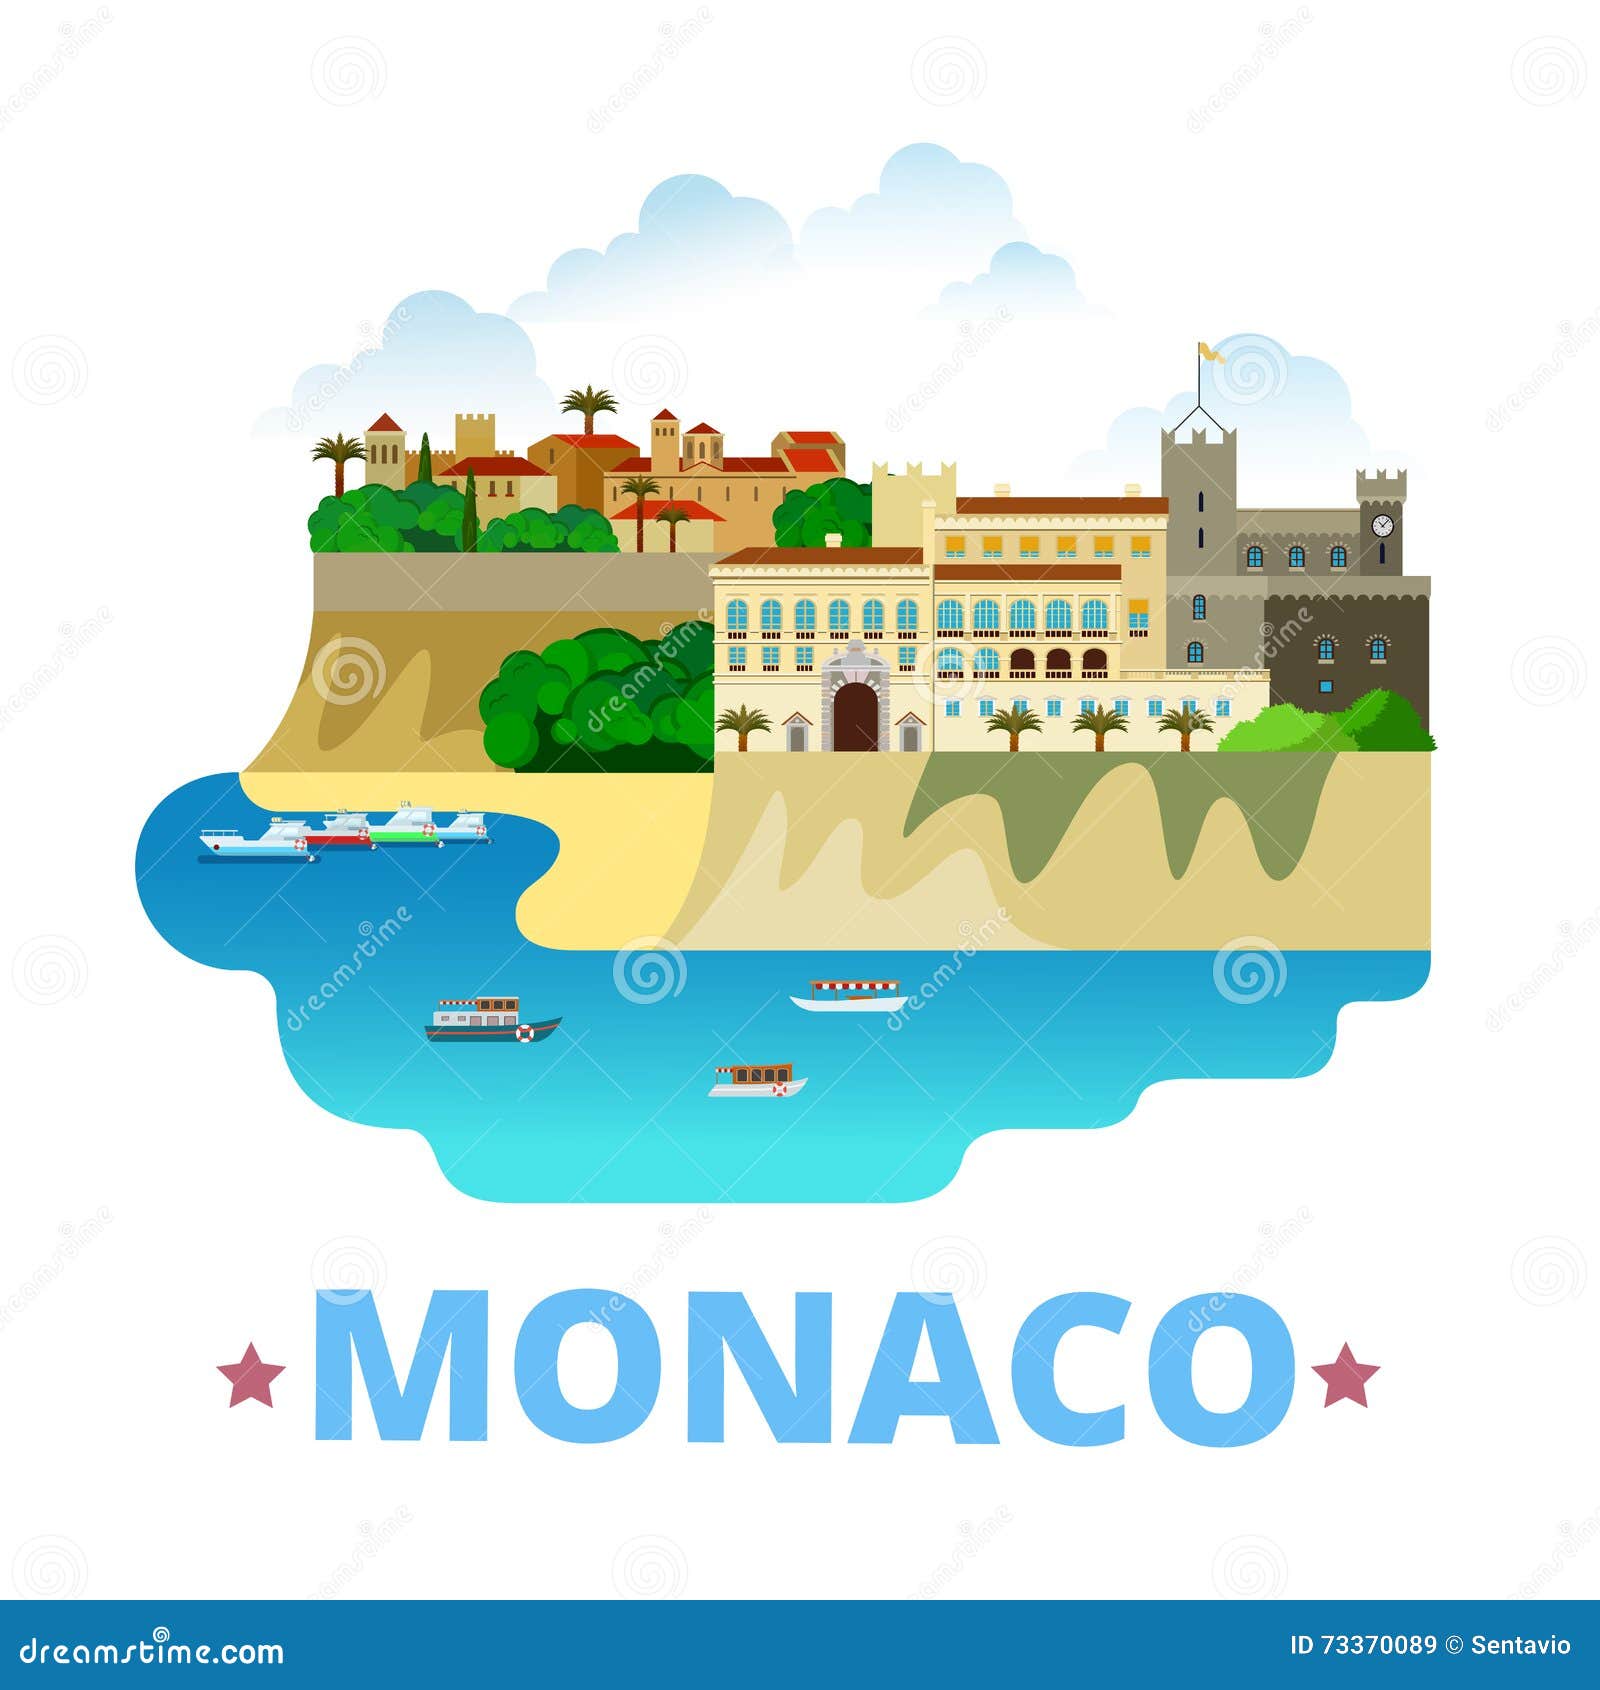 monaco country  template flat cartoon style